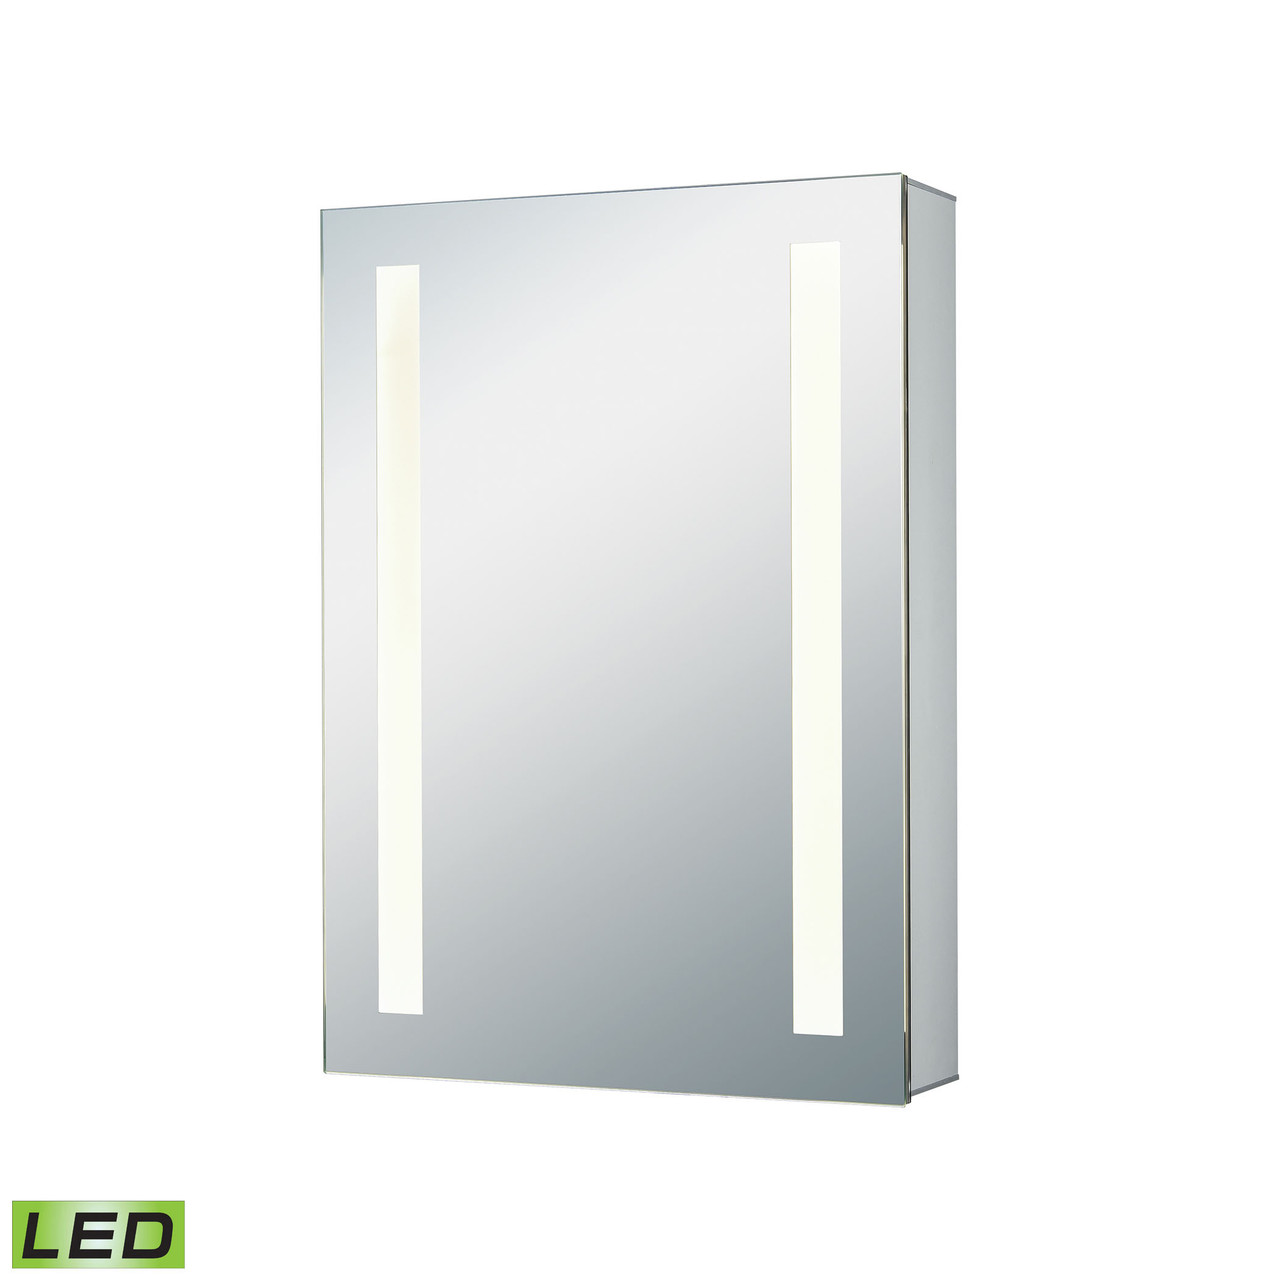 ELK LIGHTING LMC3K-2027-PL2 20x27-inch LED Mirrored Medicine Cabinet